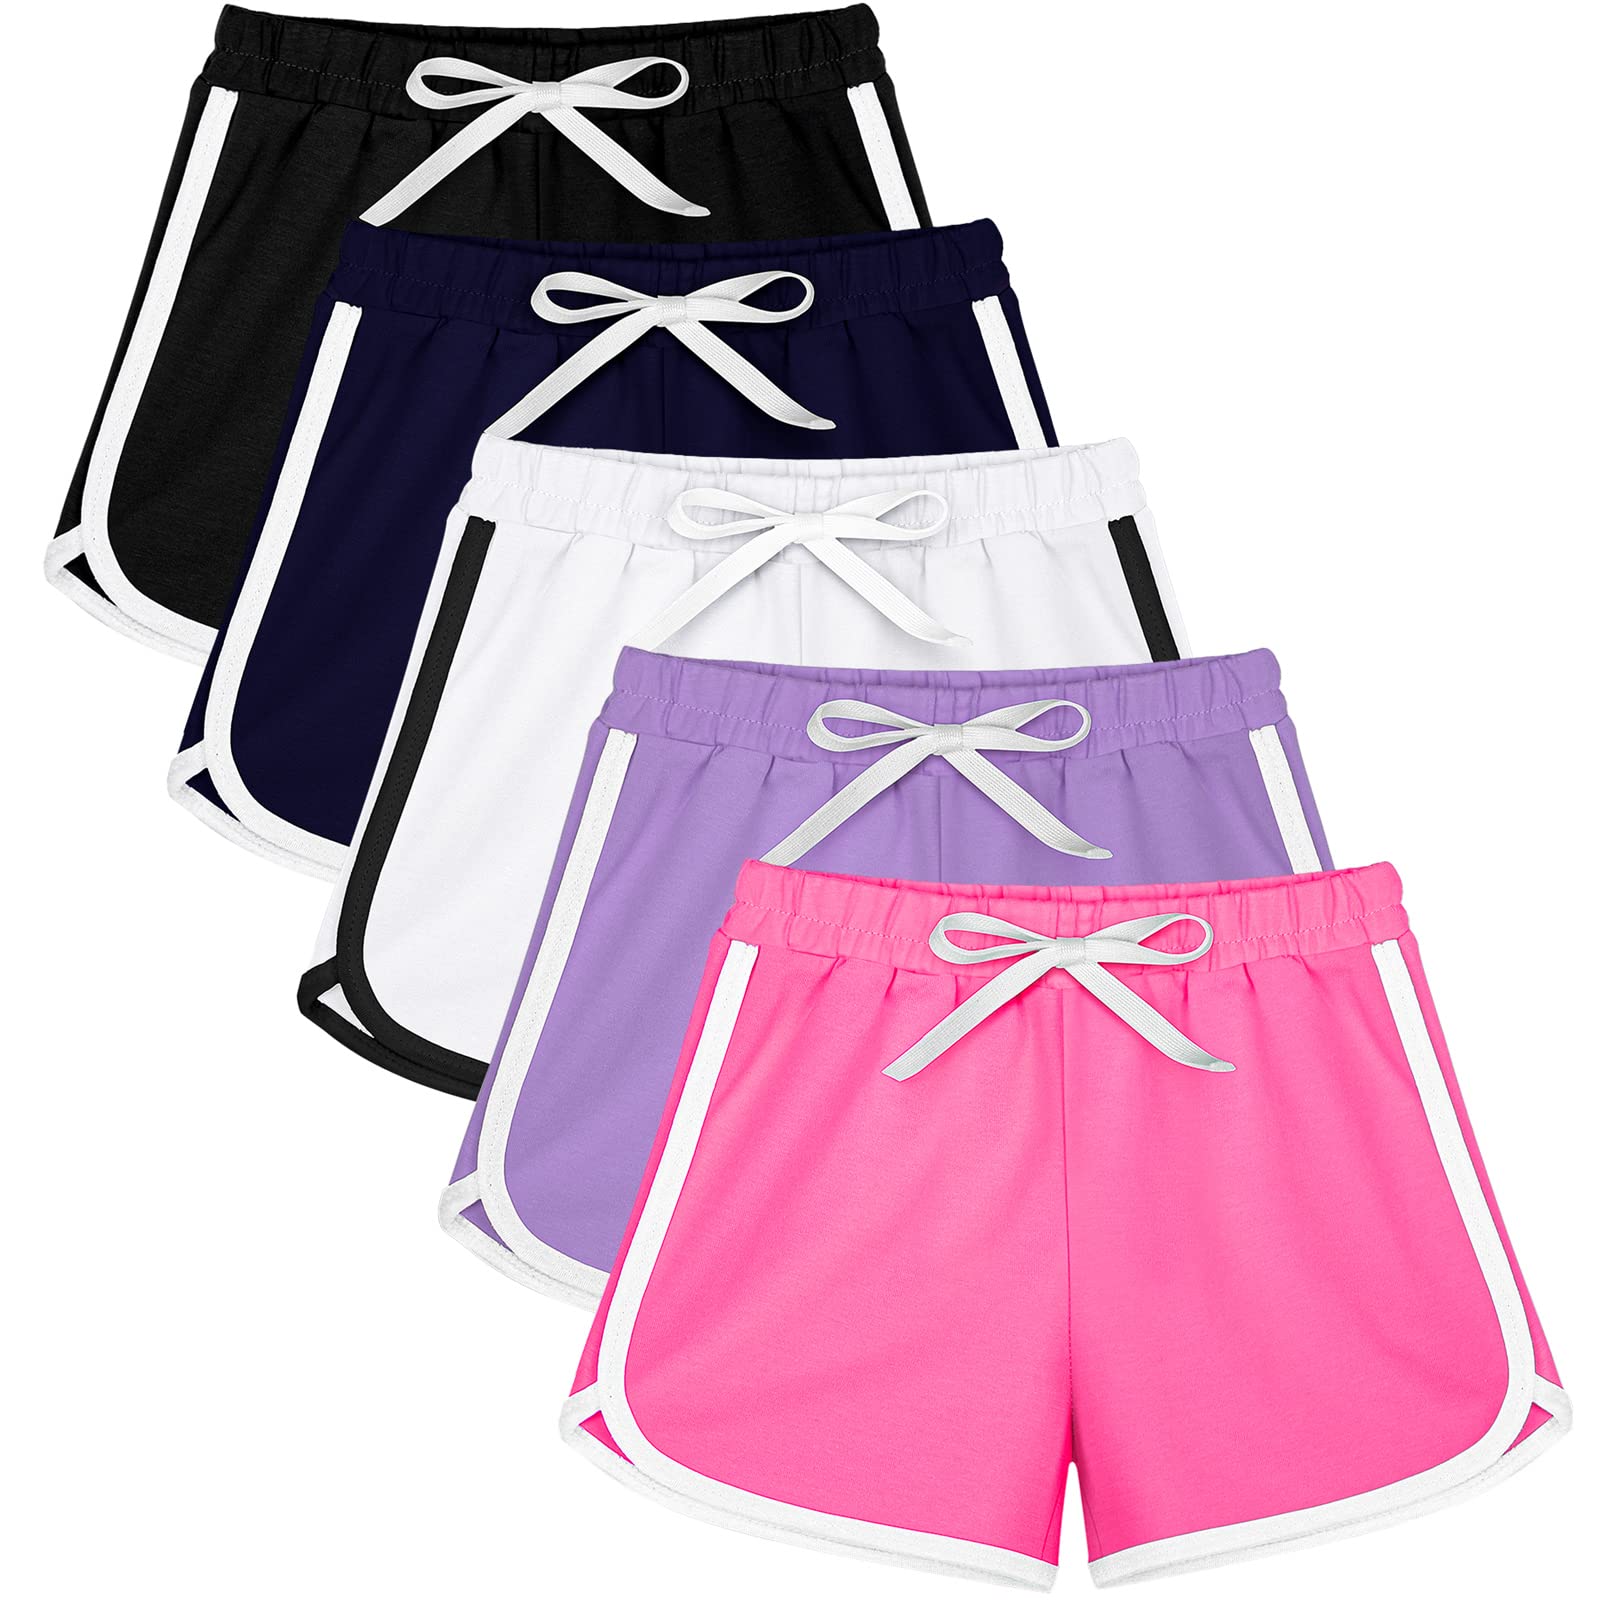 Resinta 5 Packs Girls Shorts Summer Running Athletic Shorts Cotton Dance  Yoga Shorts Workout Shorts for